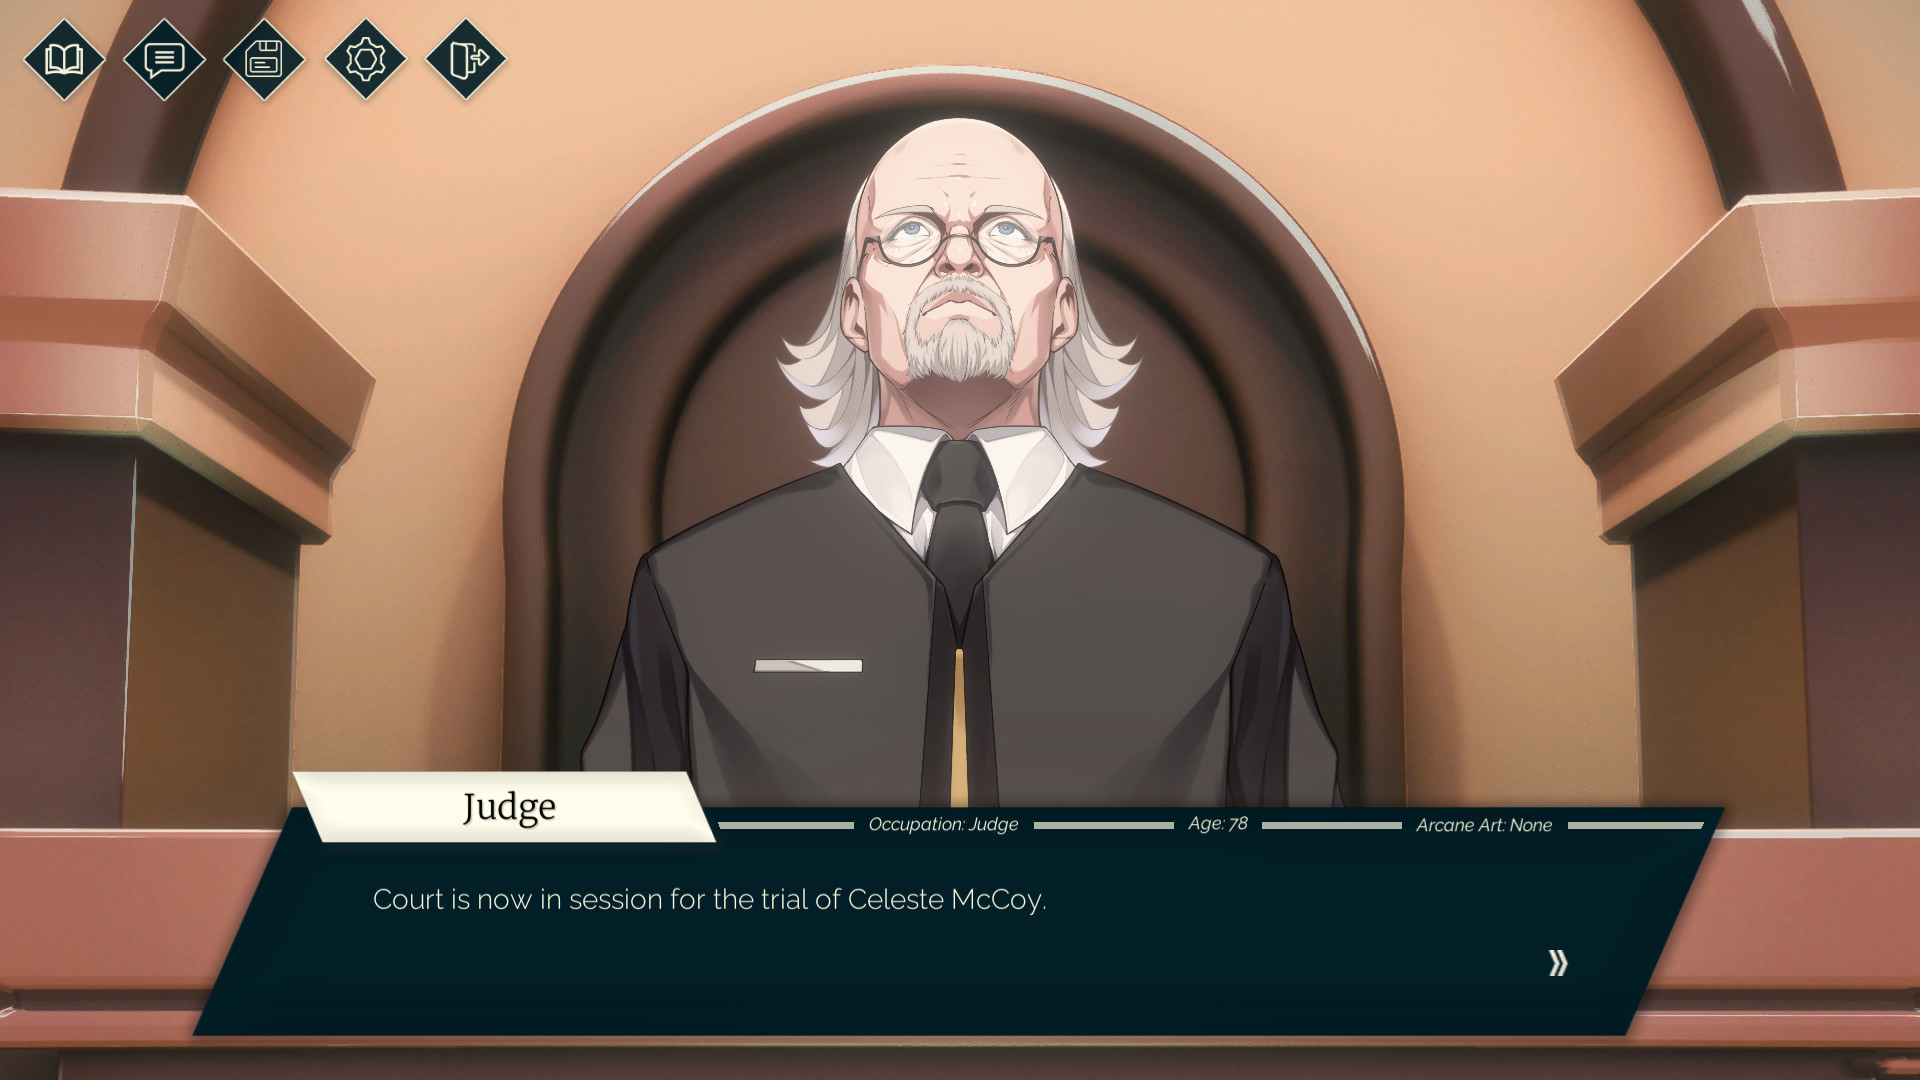 Tyrion Cuthbert: Attorney of the Arcane screenshot